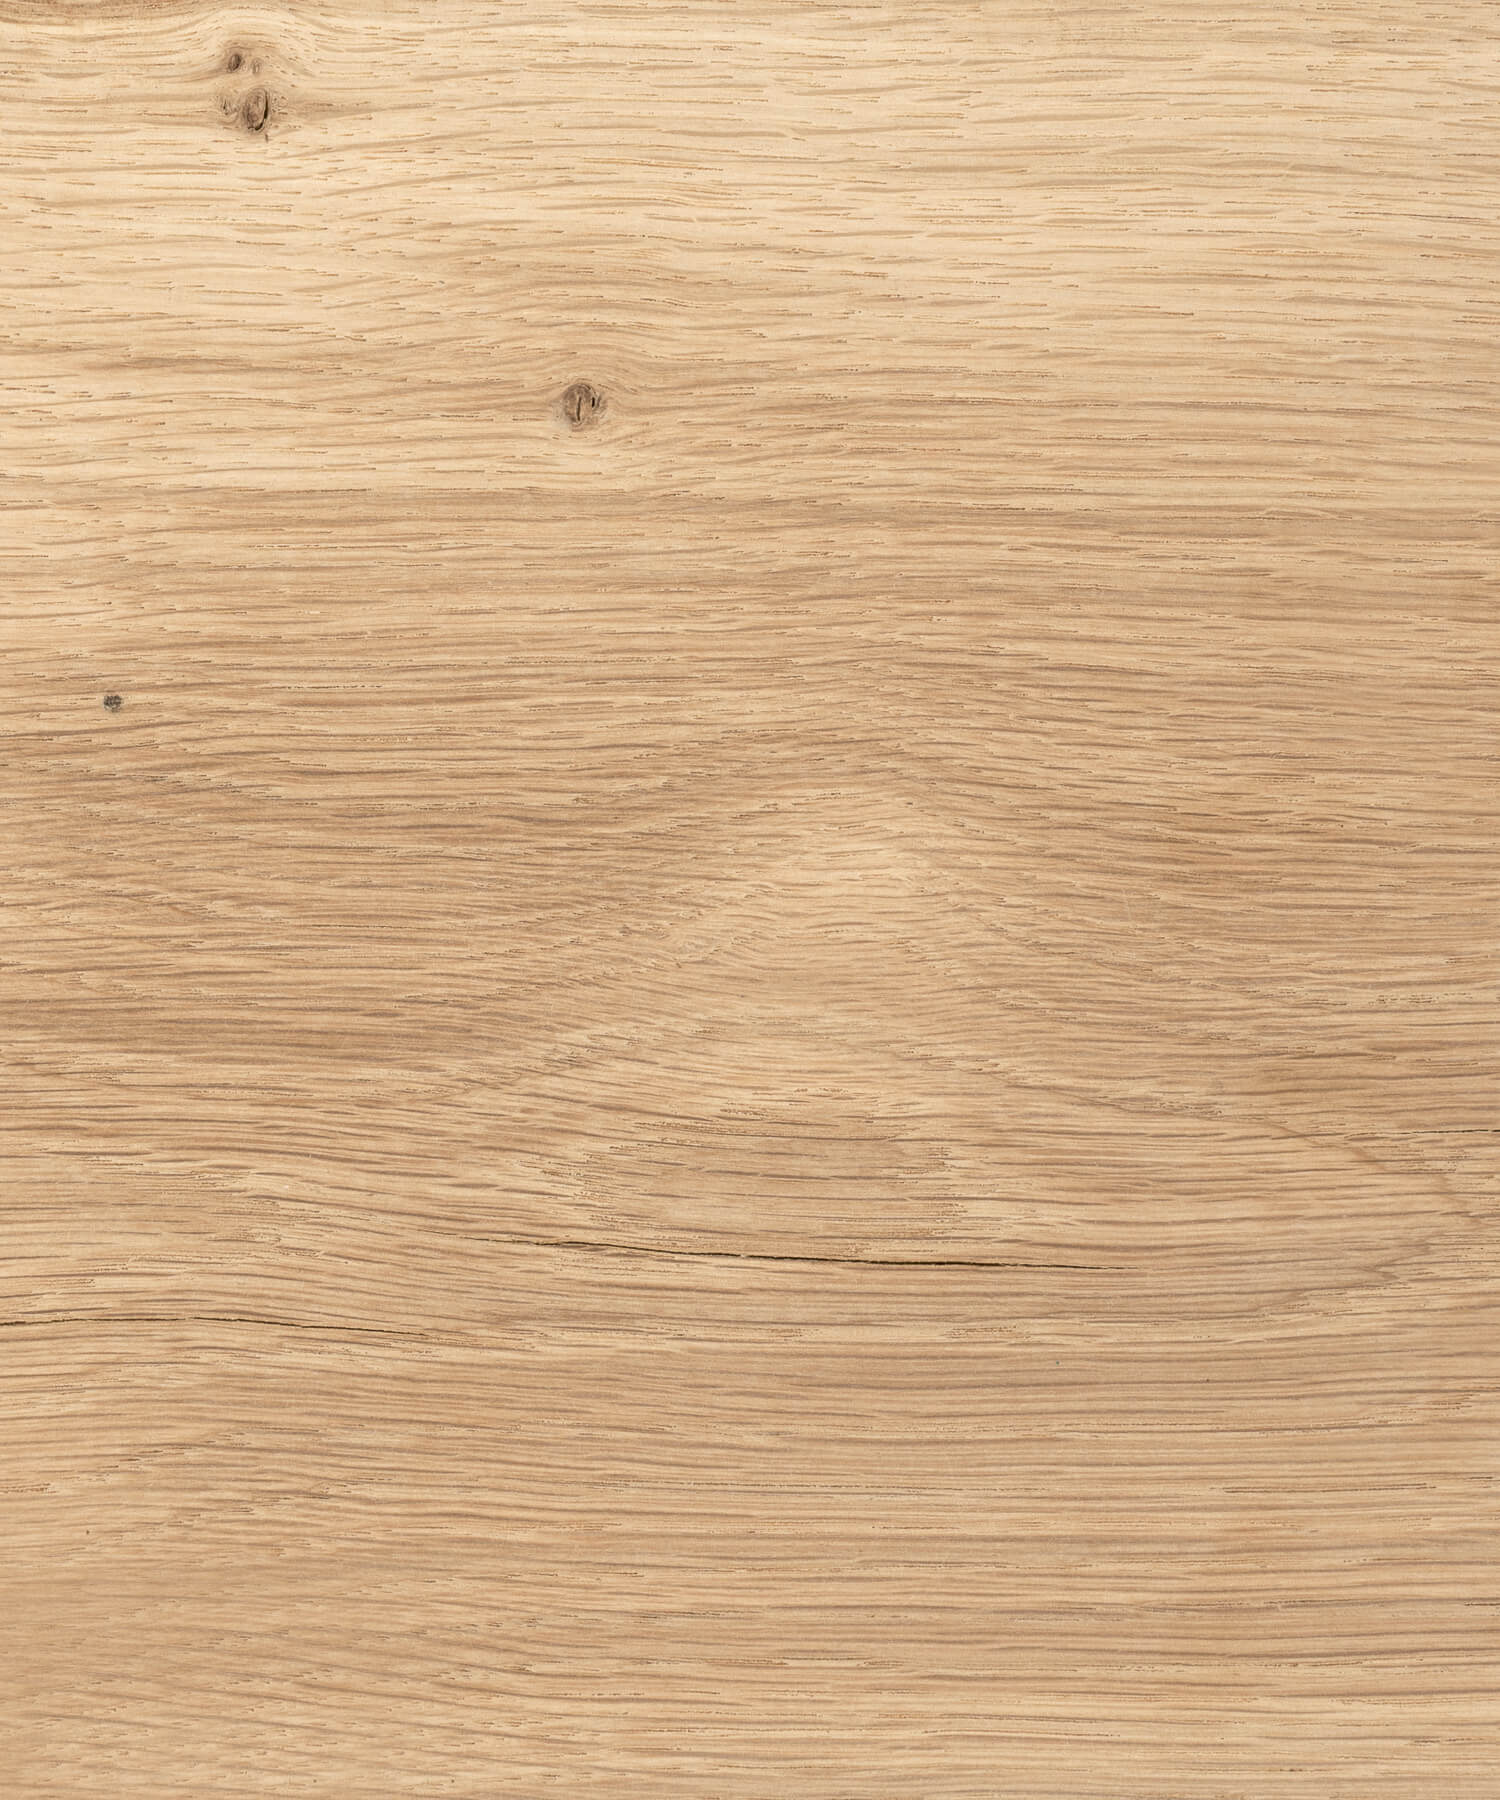 oak timber grain close up